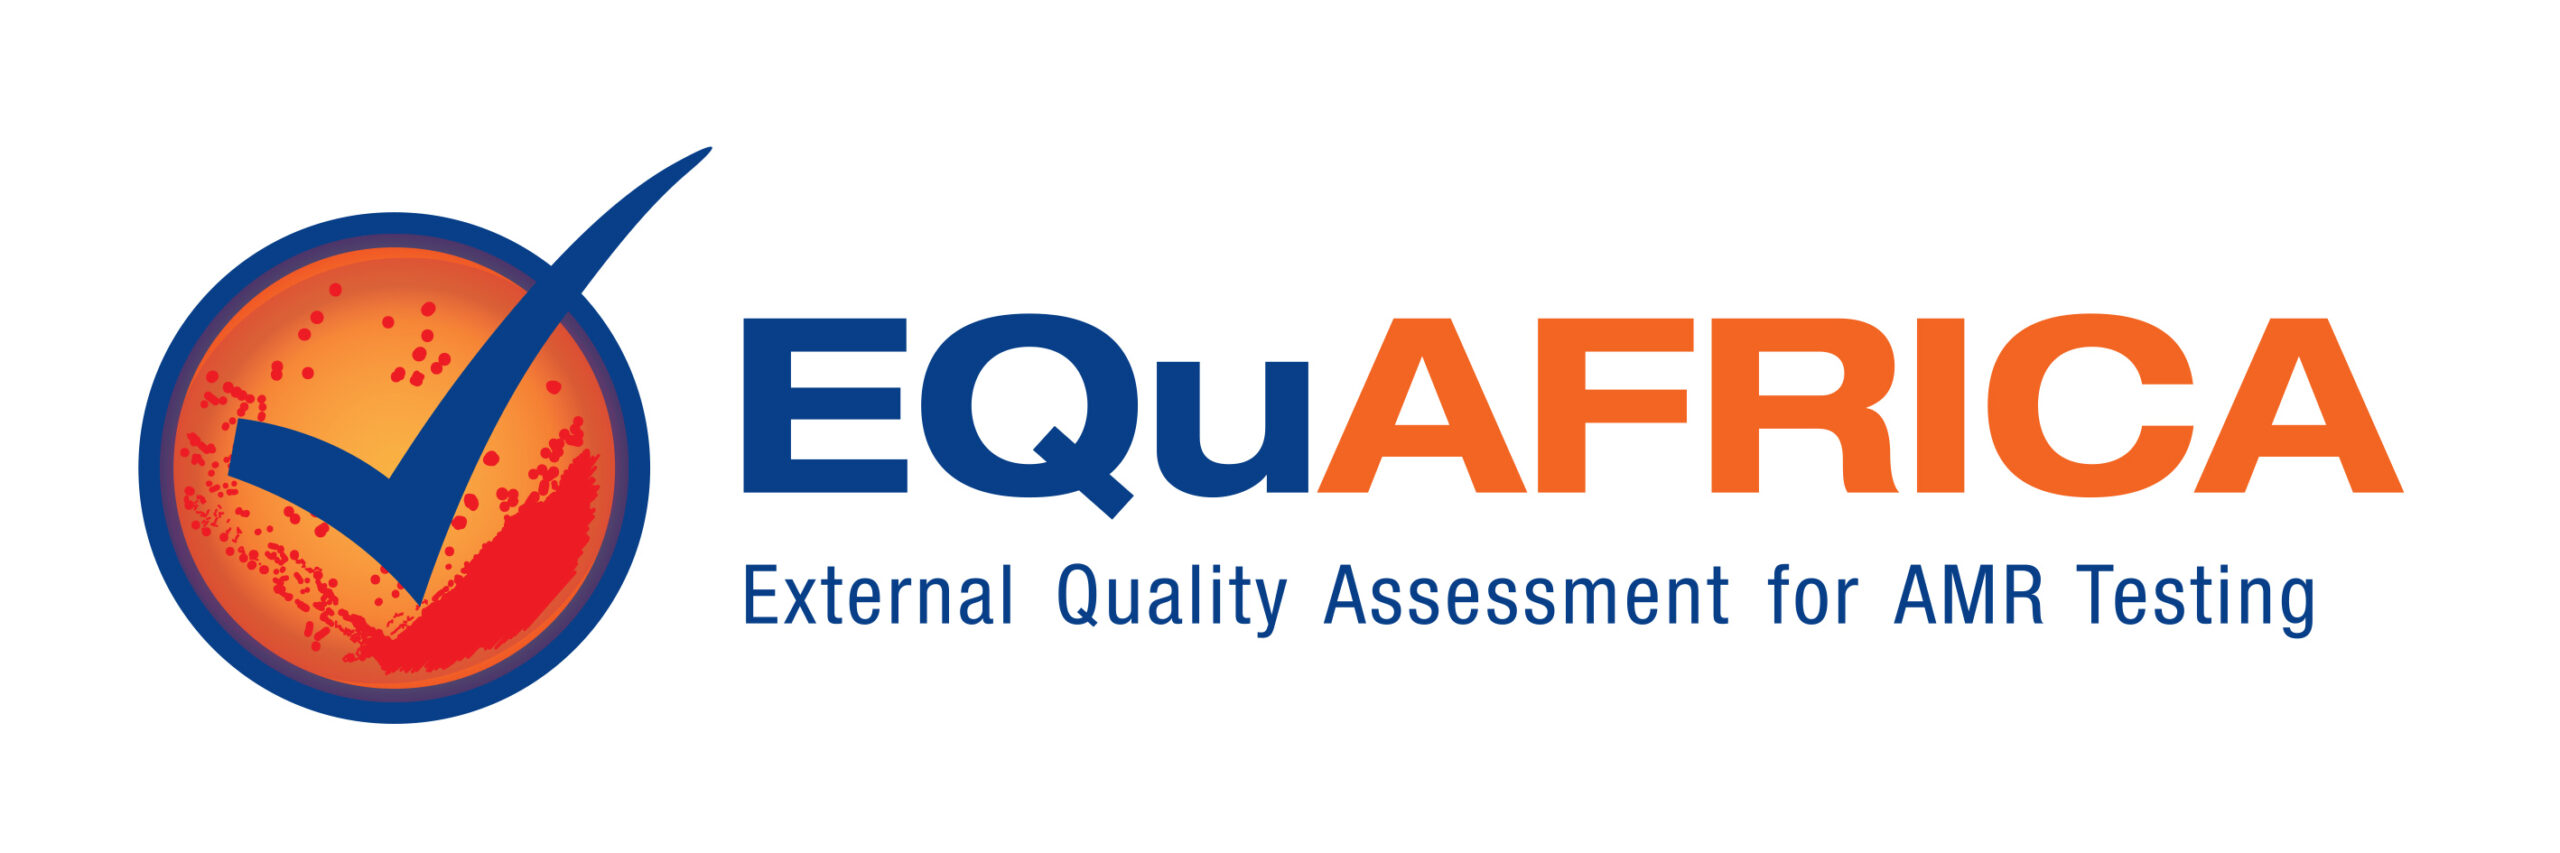 EQuAFRICA (External Quality Assessment for Africa)